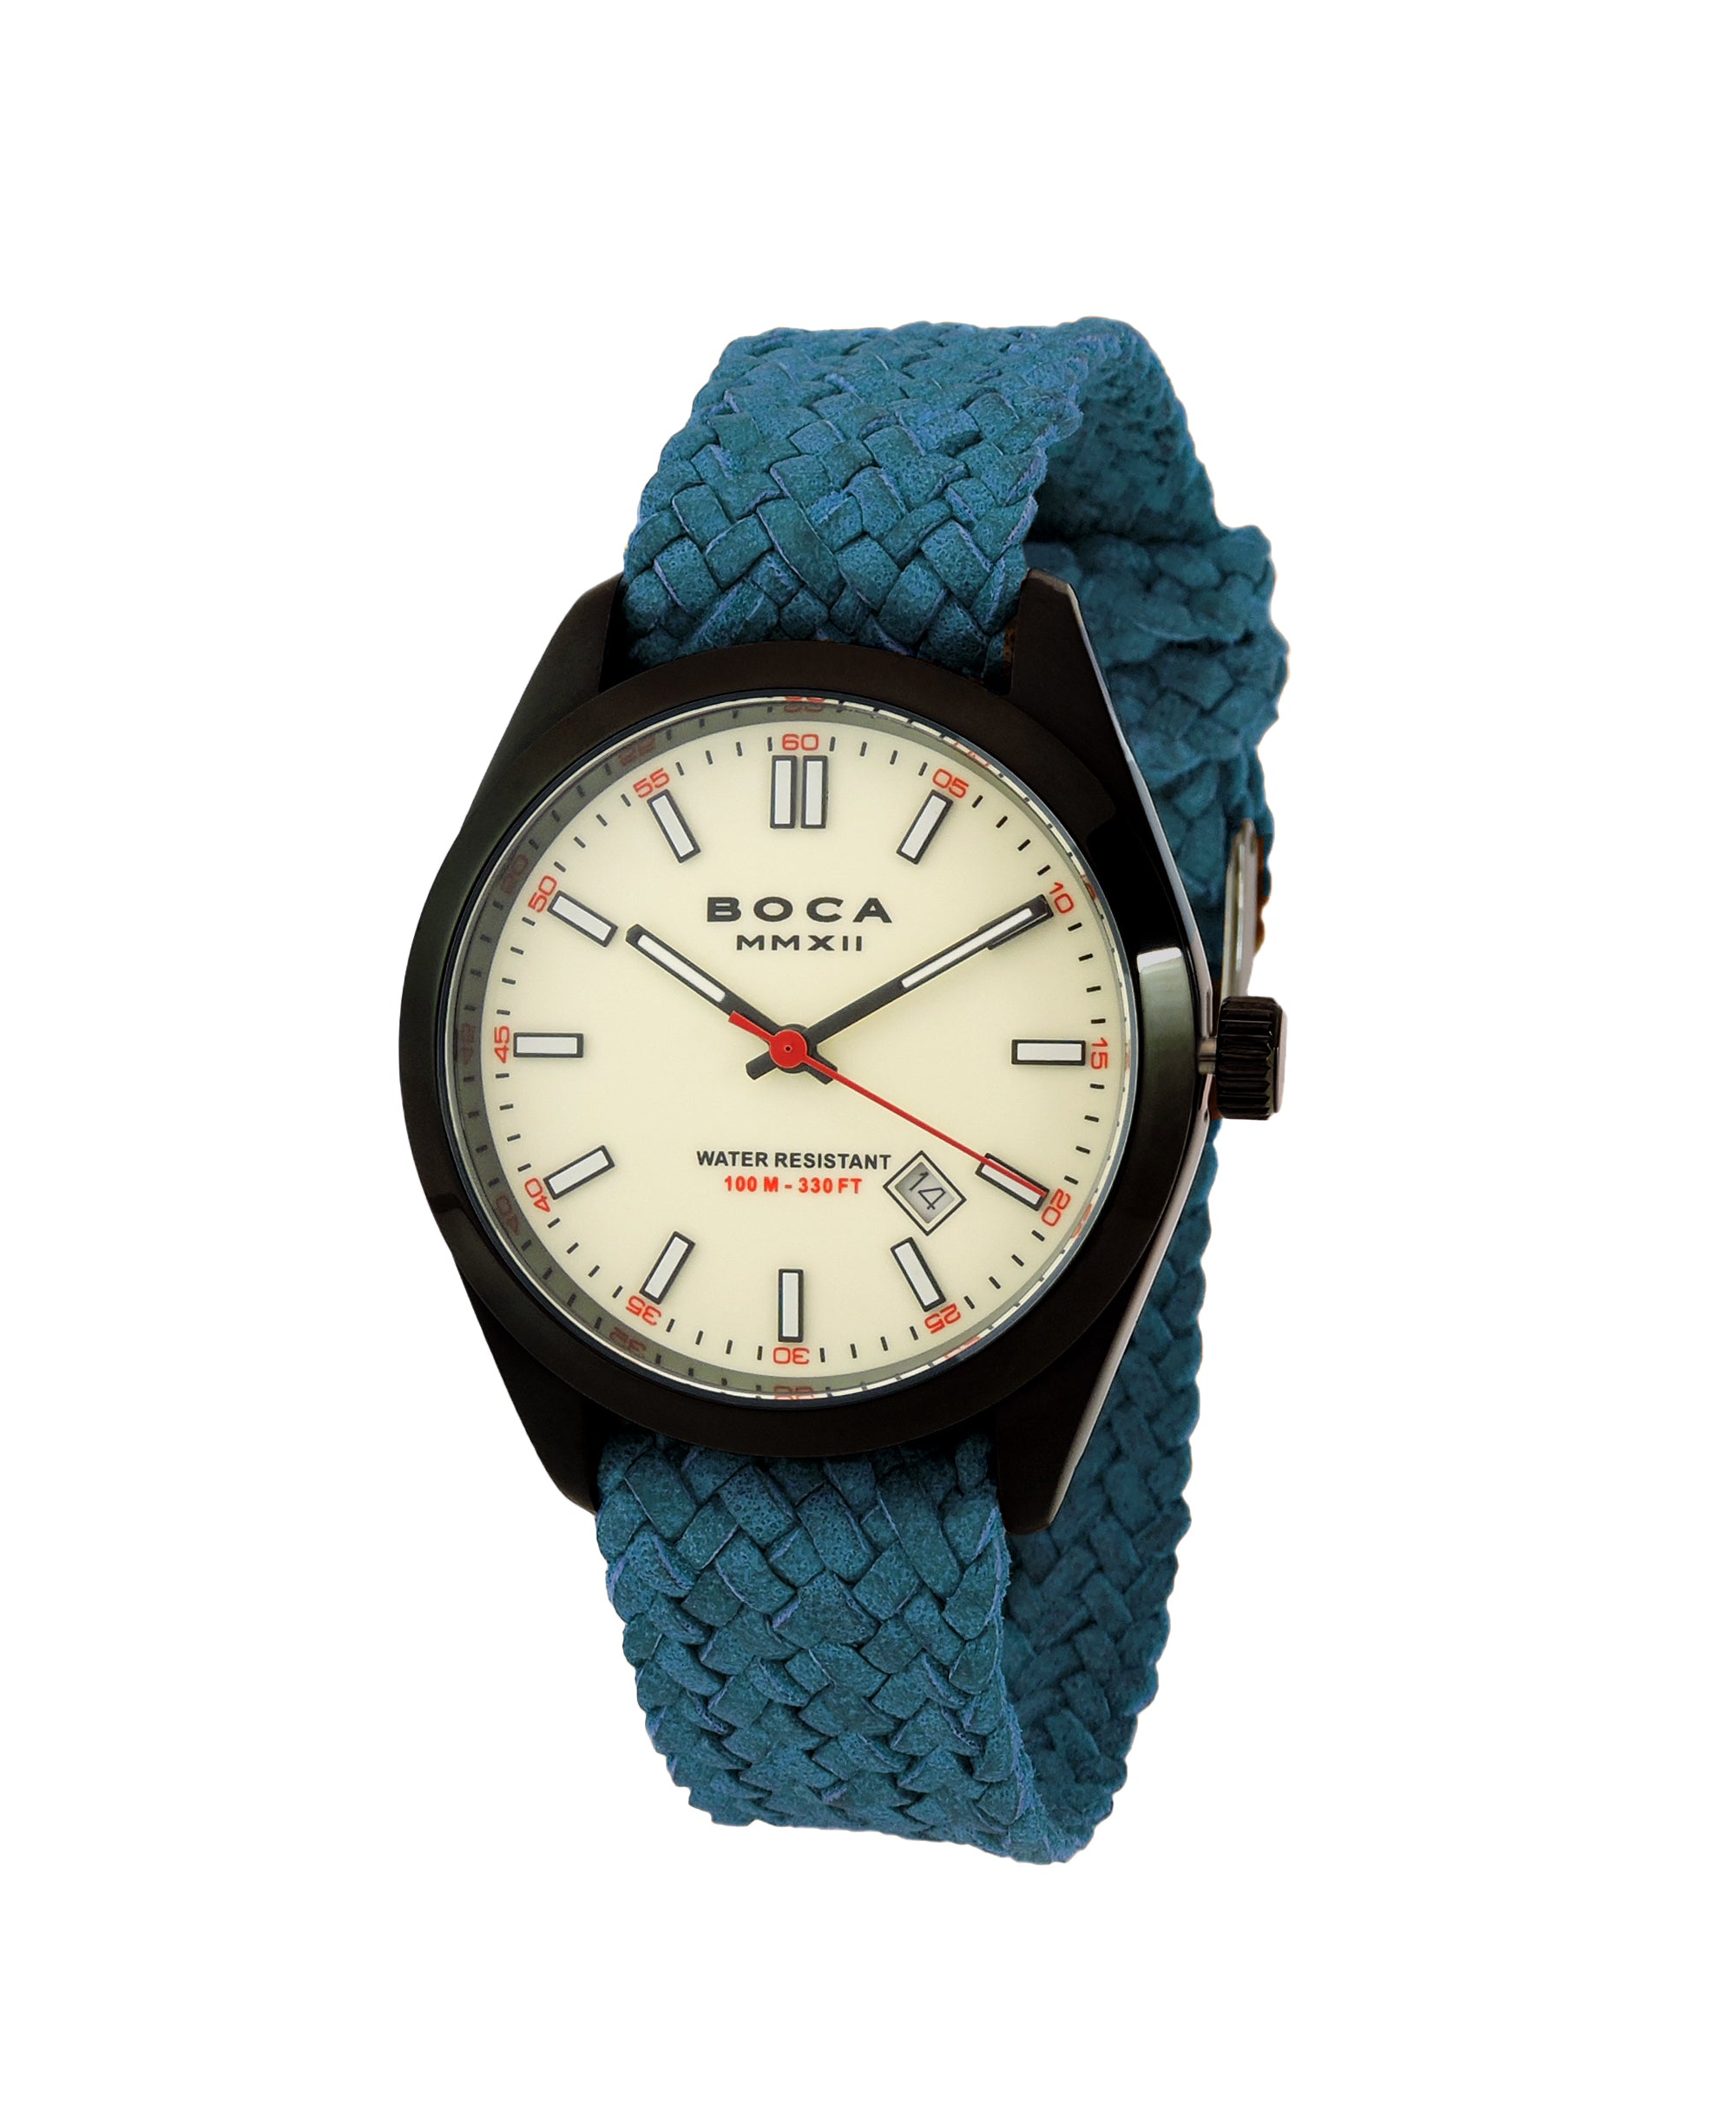 Saphari NERO - Turquoise Wristband - BOCA MMXII - Official website